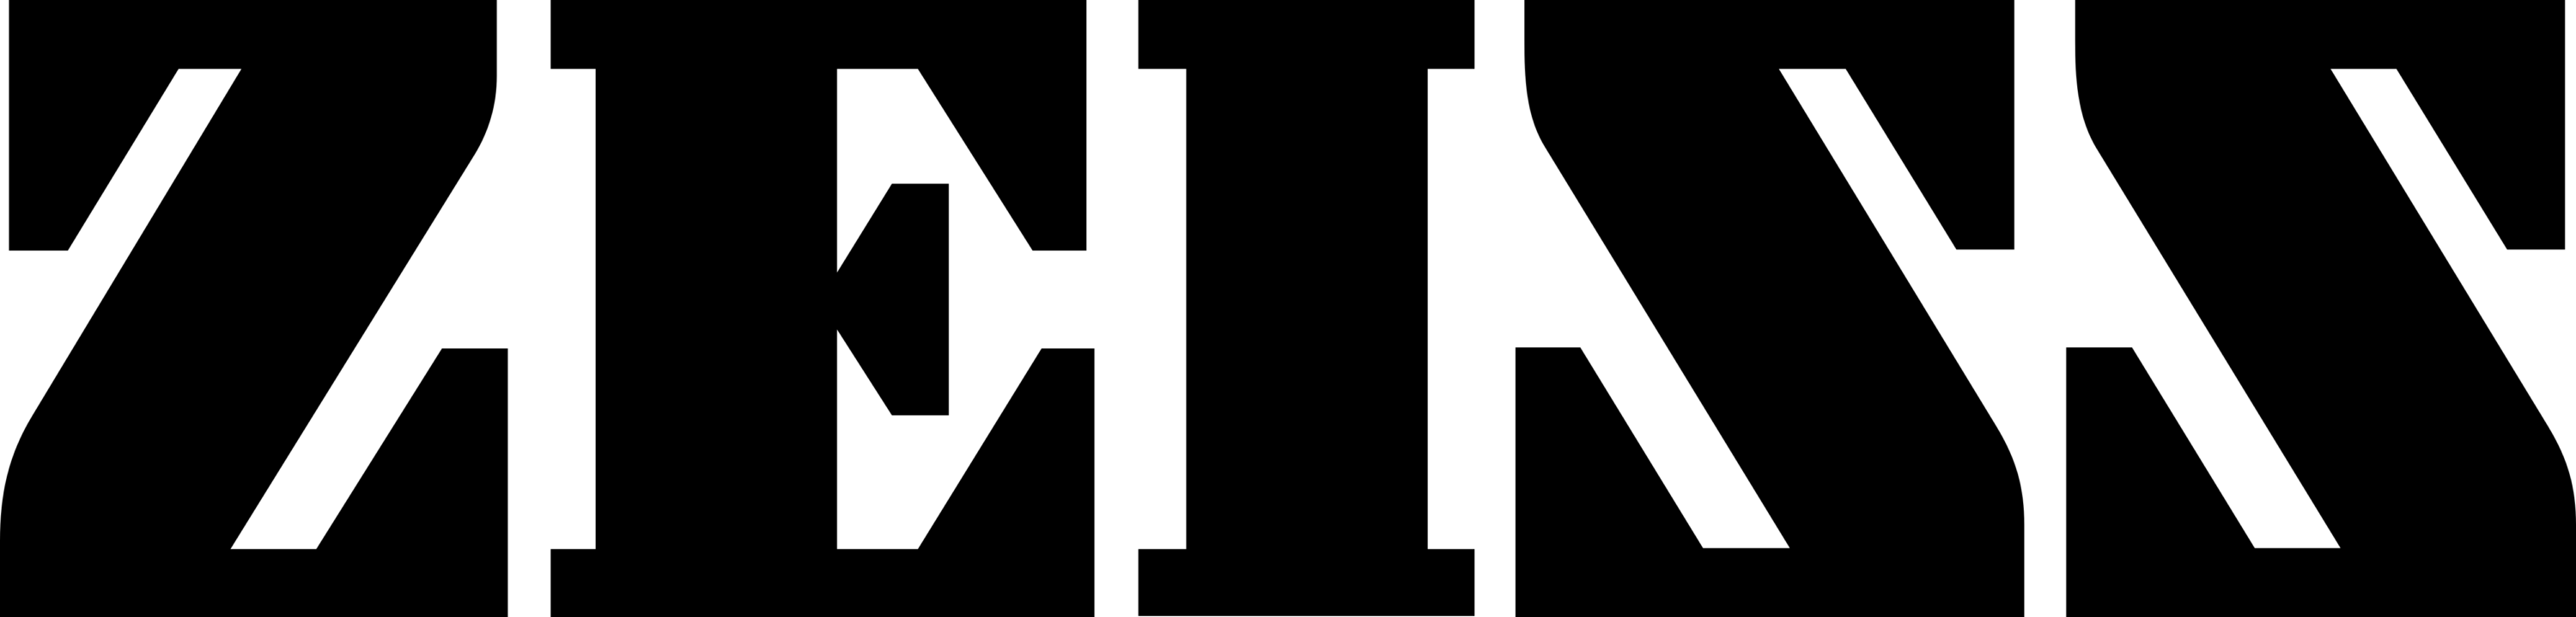 Carl Zeiss Logo 1972